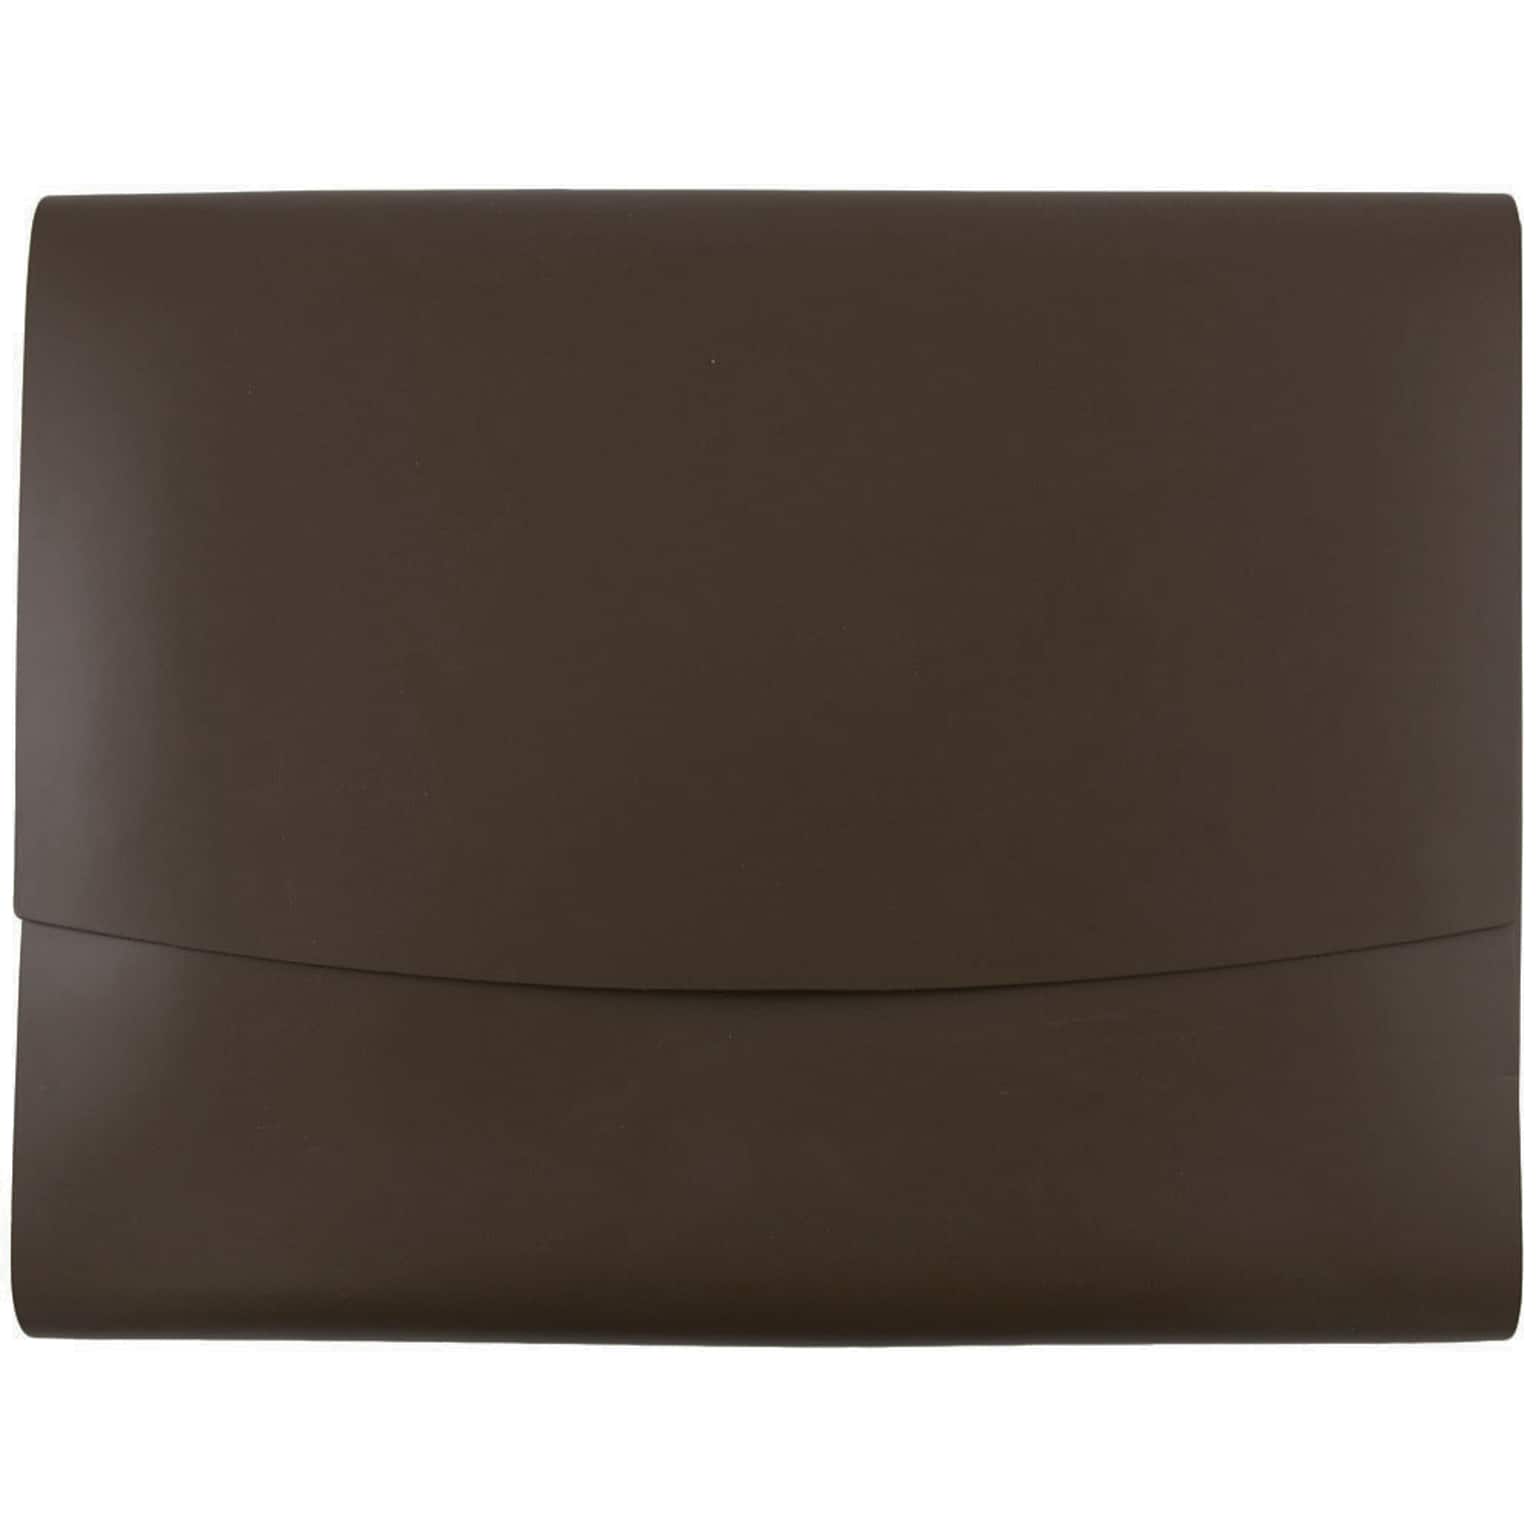 JAM Paper Leather Portfolio Case with Snap Closure, Brown, 12/Carton (2233317451B)